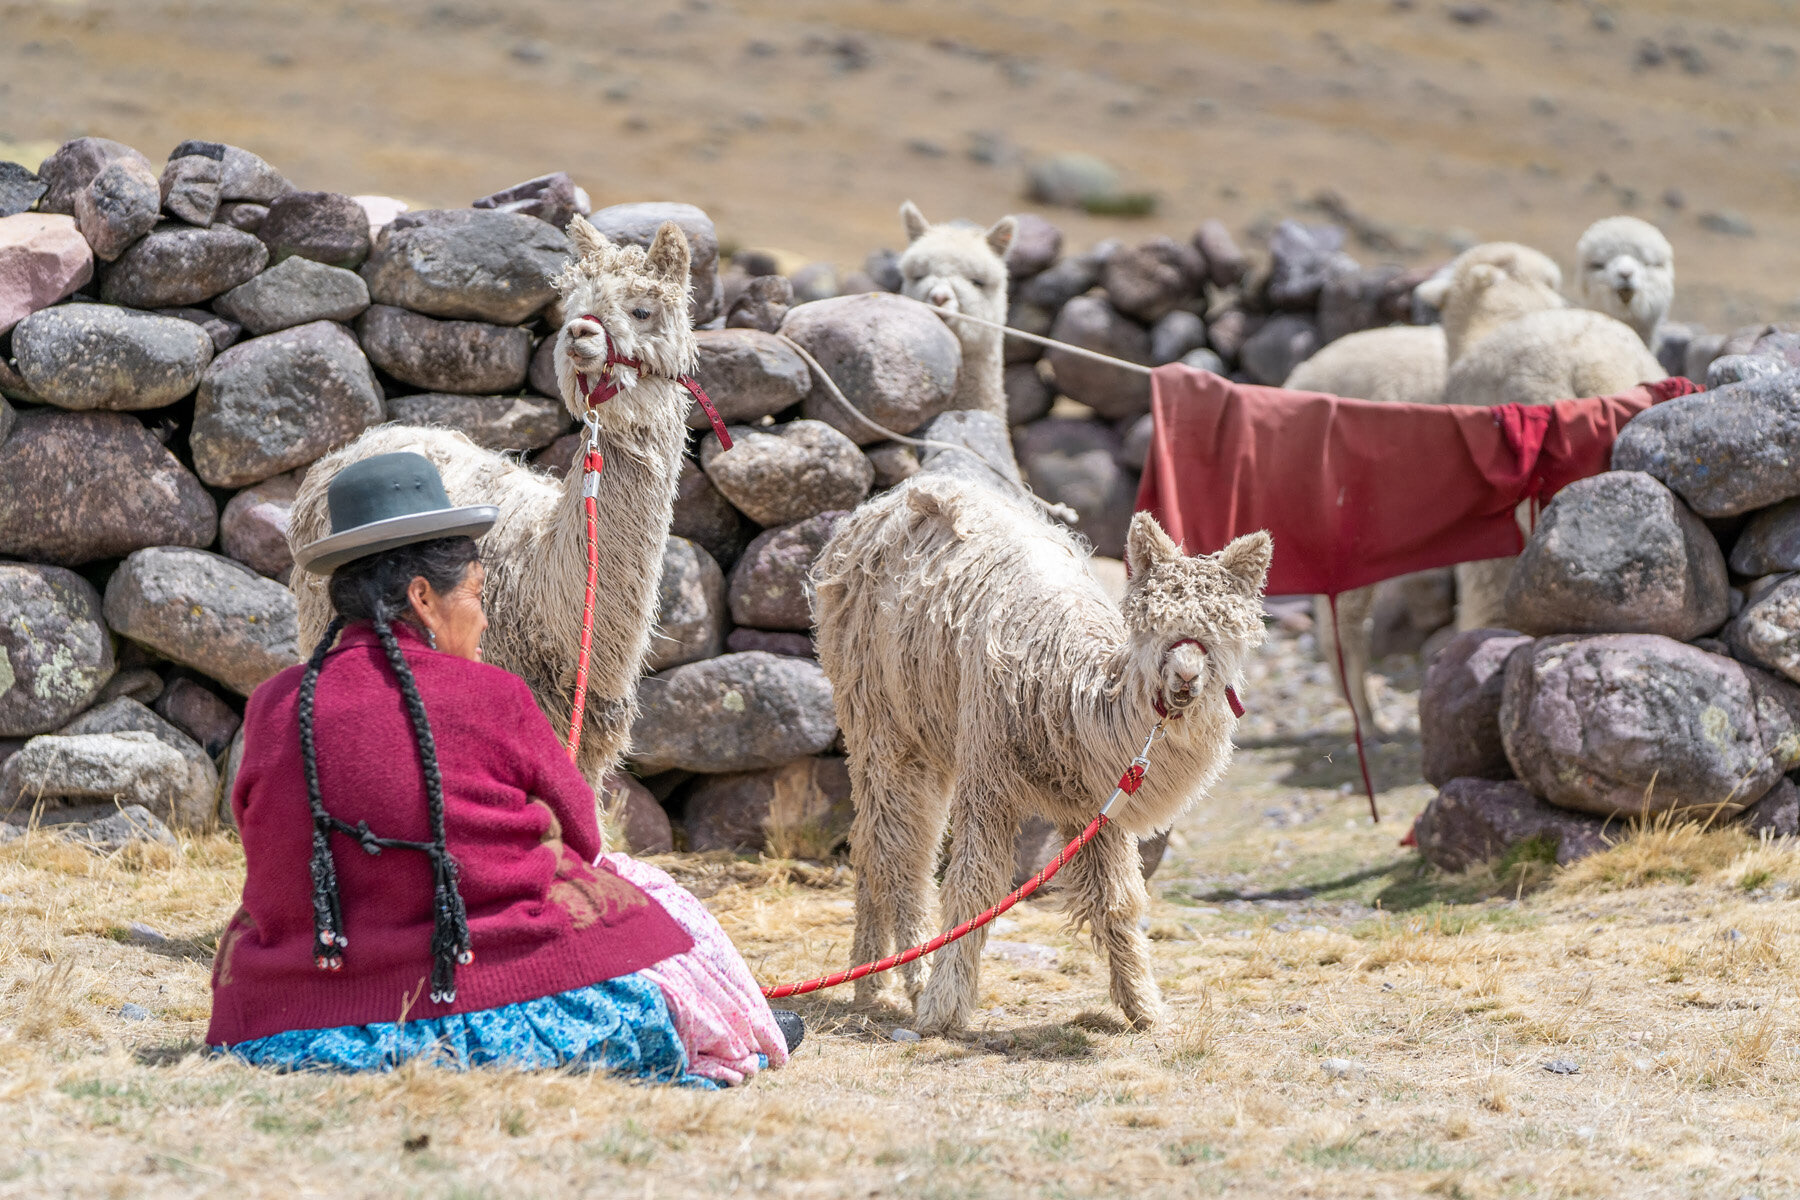 198_Wasim Muklashy Photography_Andes Mountains_Peru_Quechua Benefit_Picotani_Spar_Macusani_Alpaca.jpg